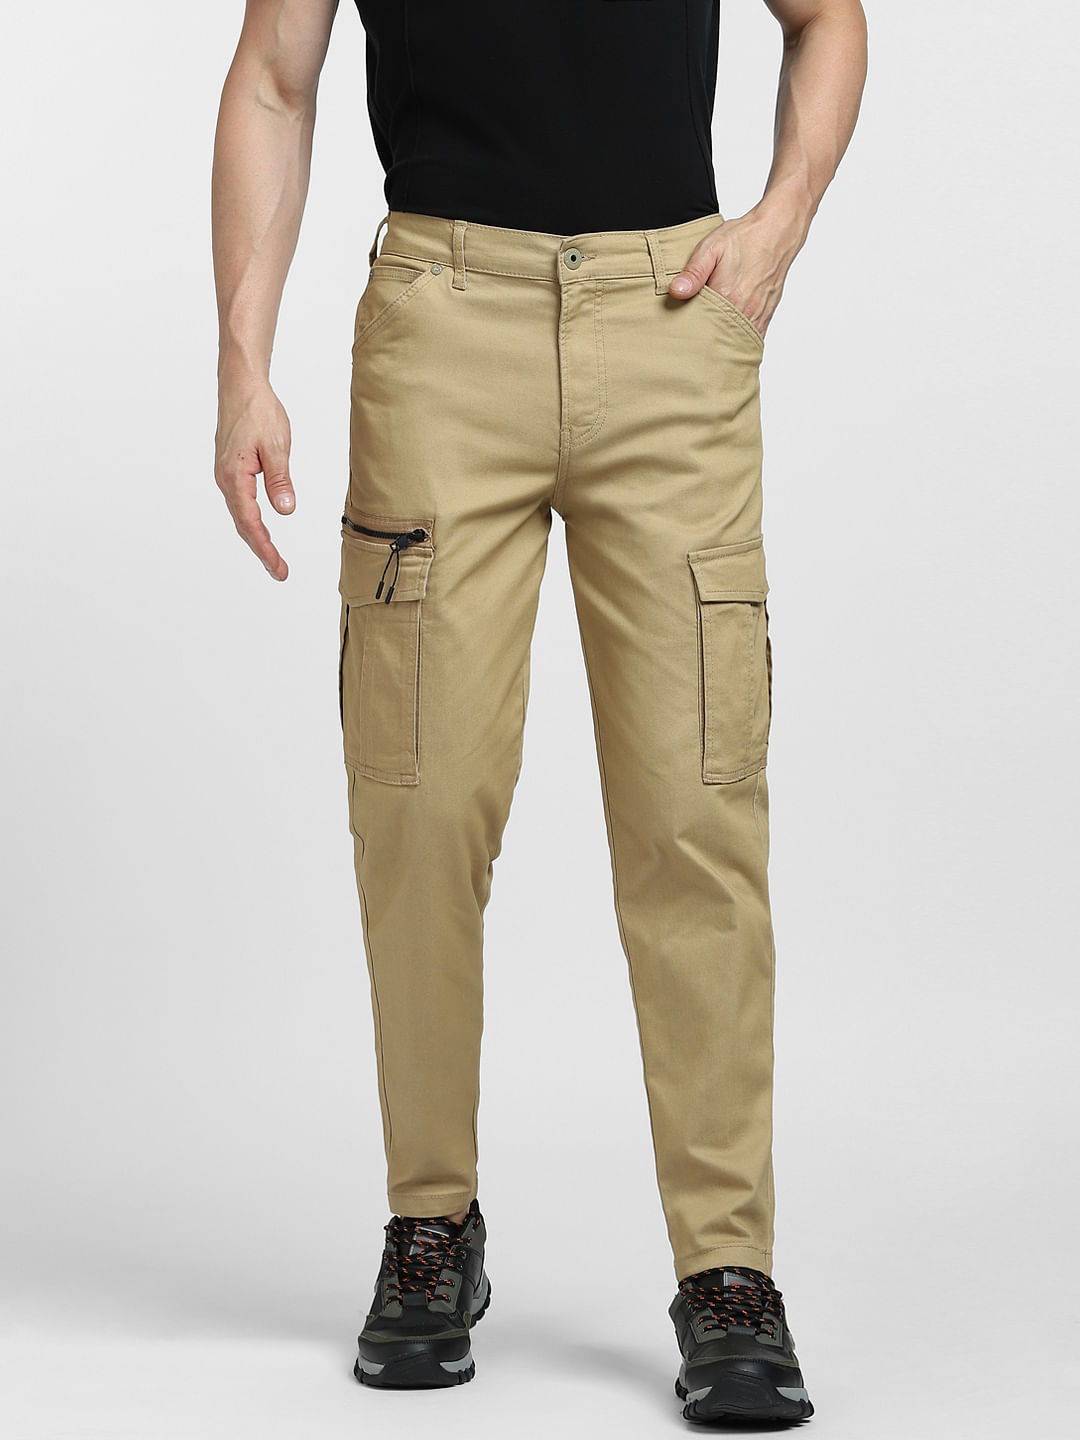 Jack  Jones Casual Trousers  Buy Jack  Jones Brown Mid Rise Chino Pants  OnlineNykaa fashion